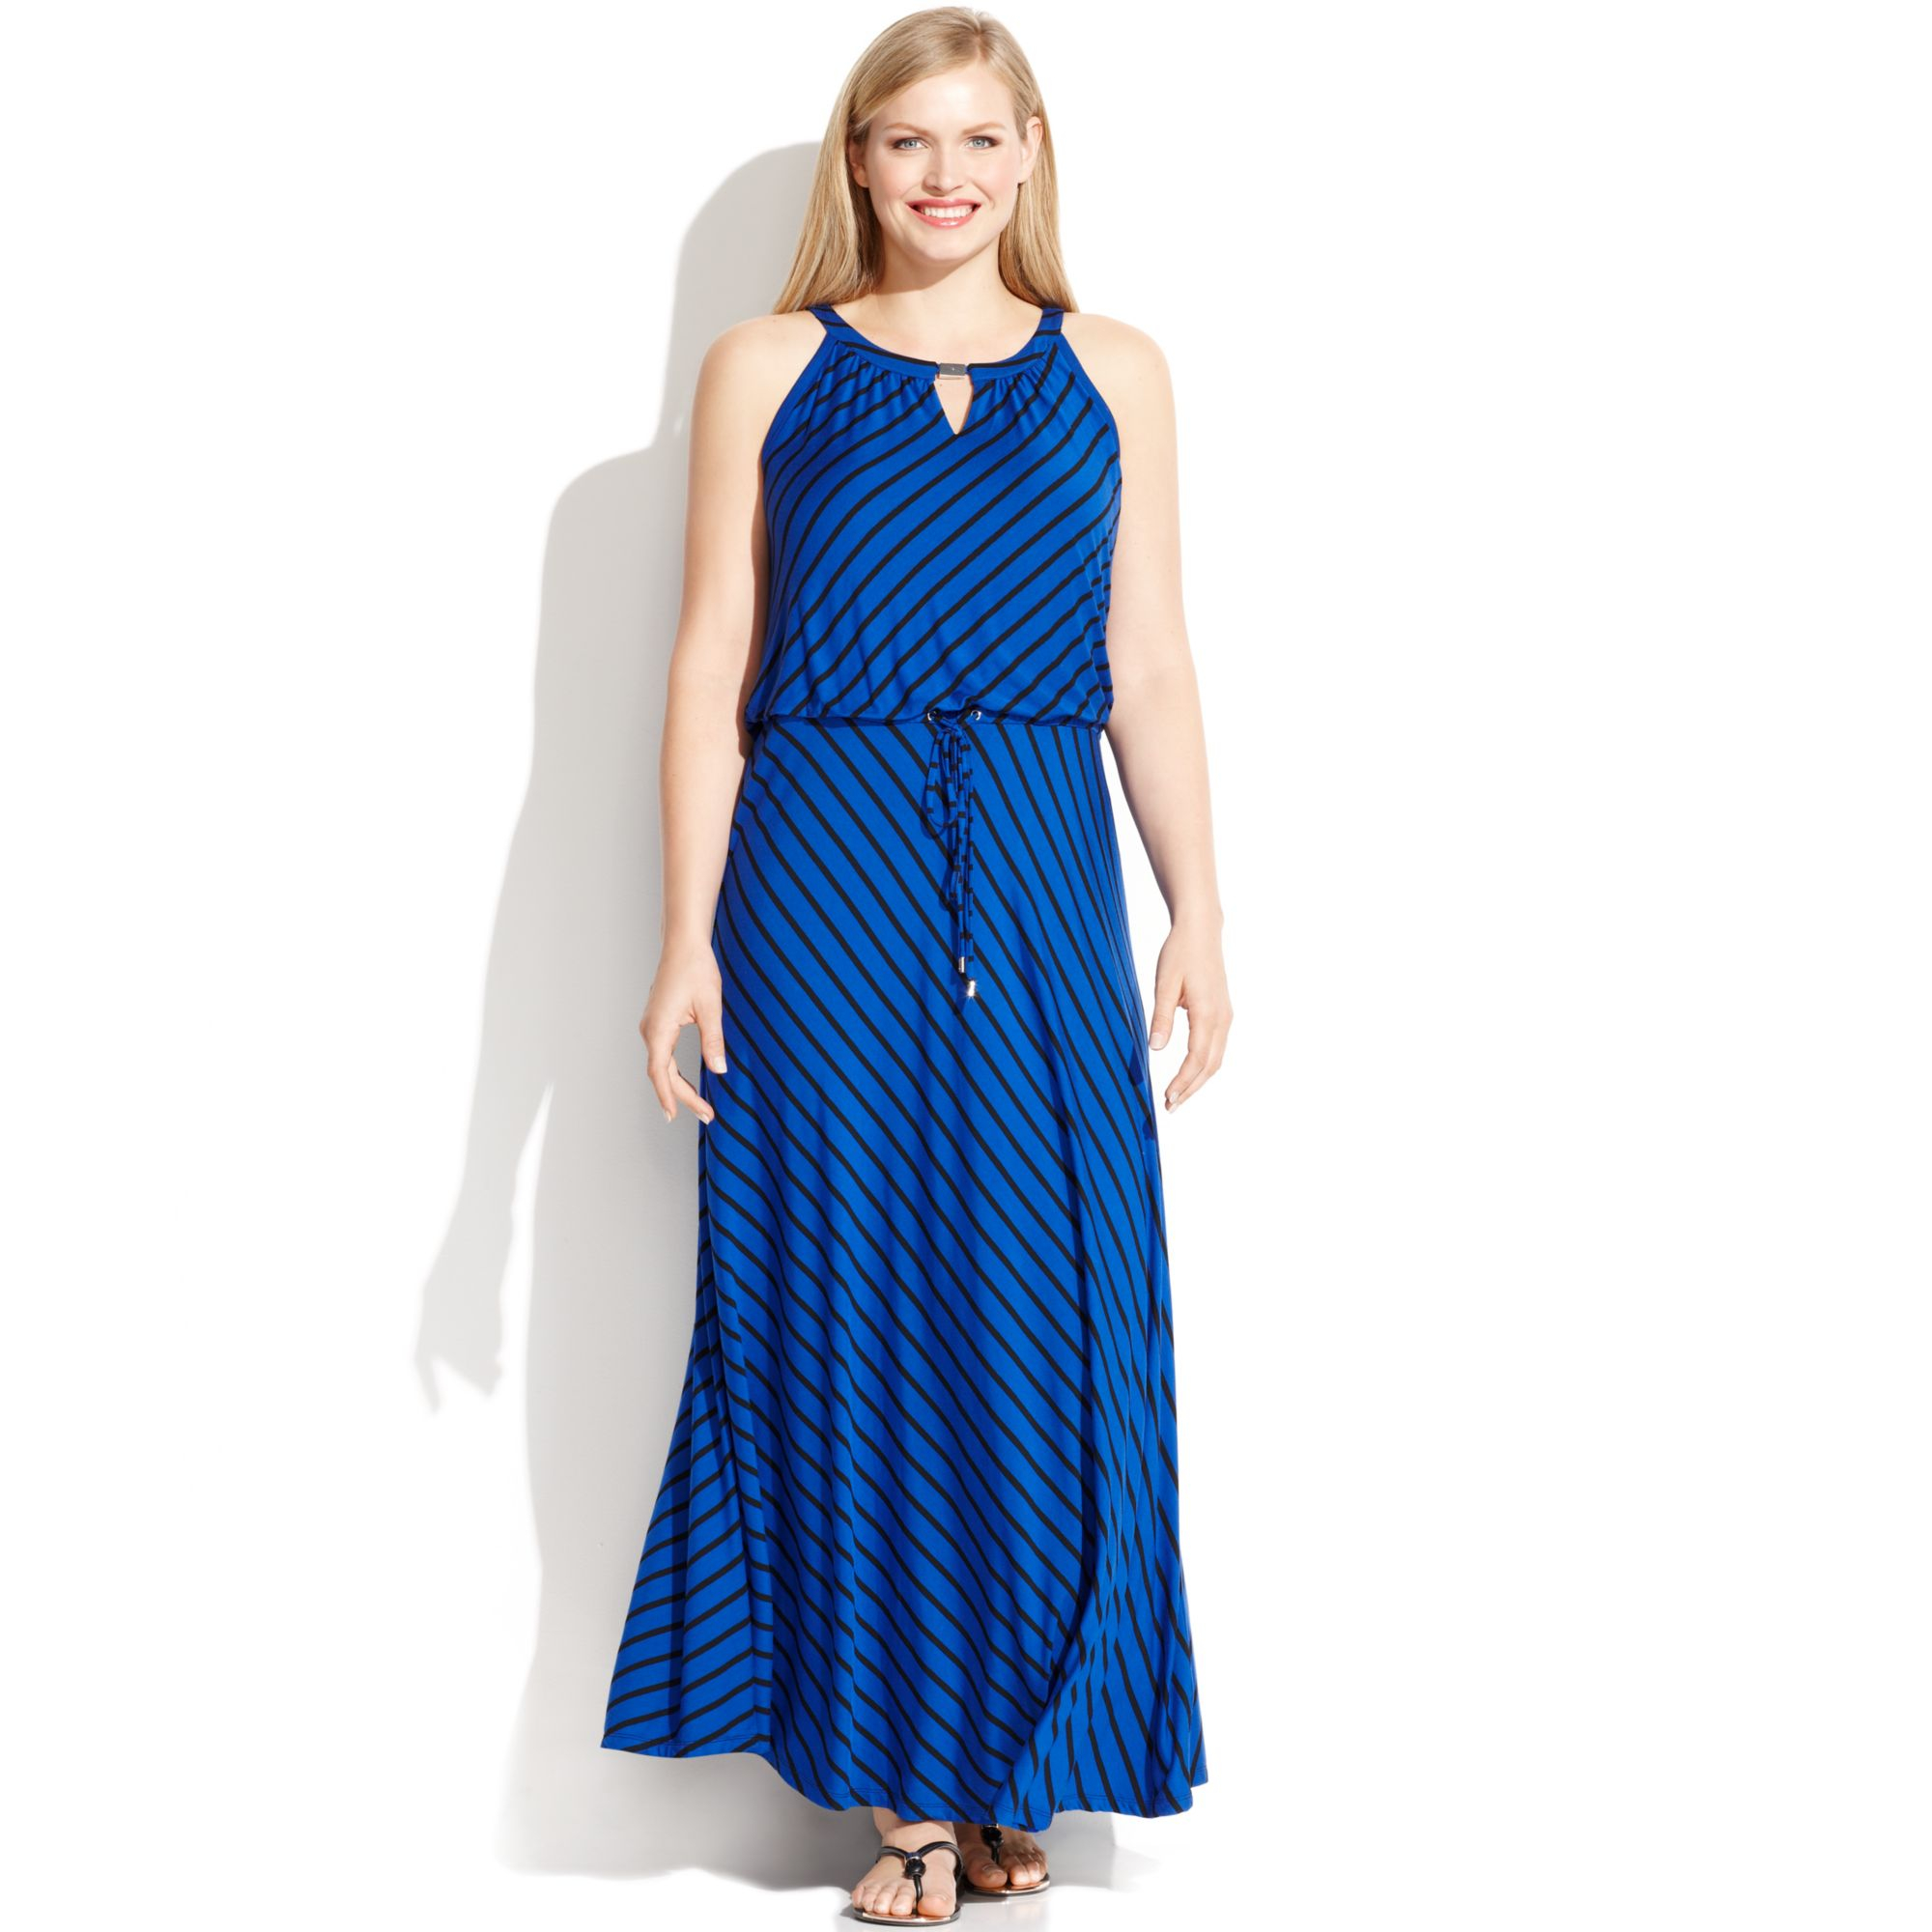 Lyst - Calvin Klein Plus Size Sleeveless Striped Keyhole Maxi Dress in Blue